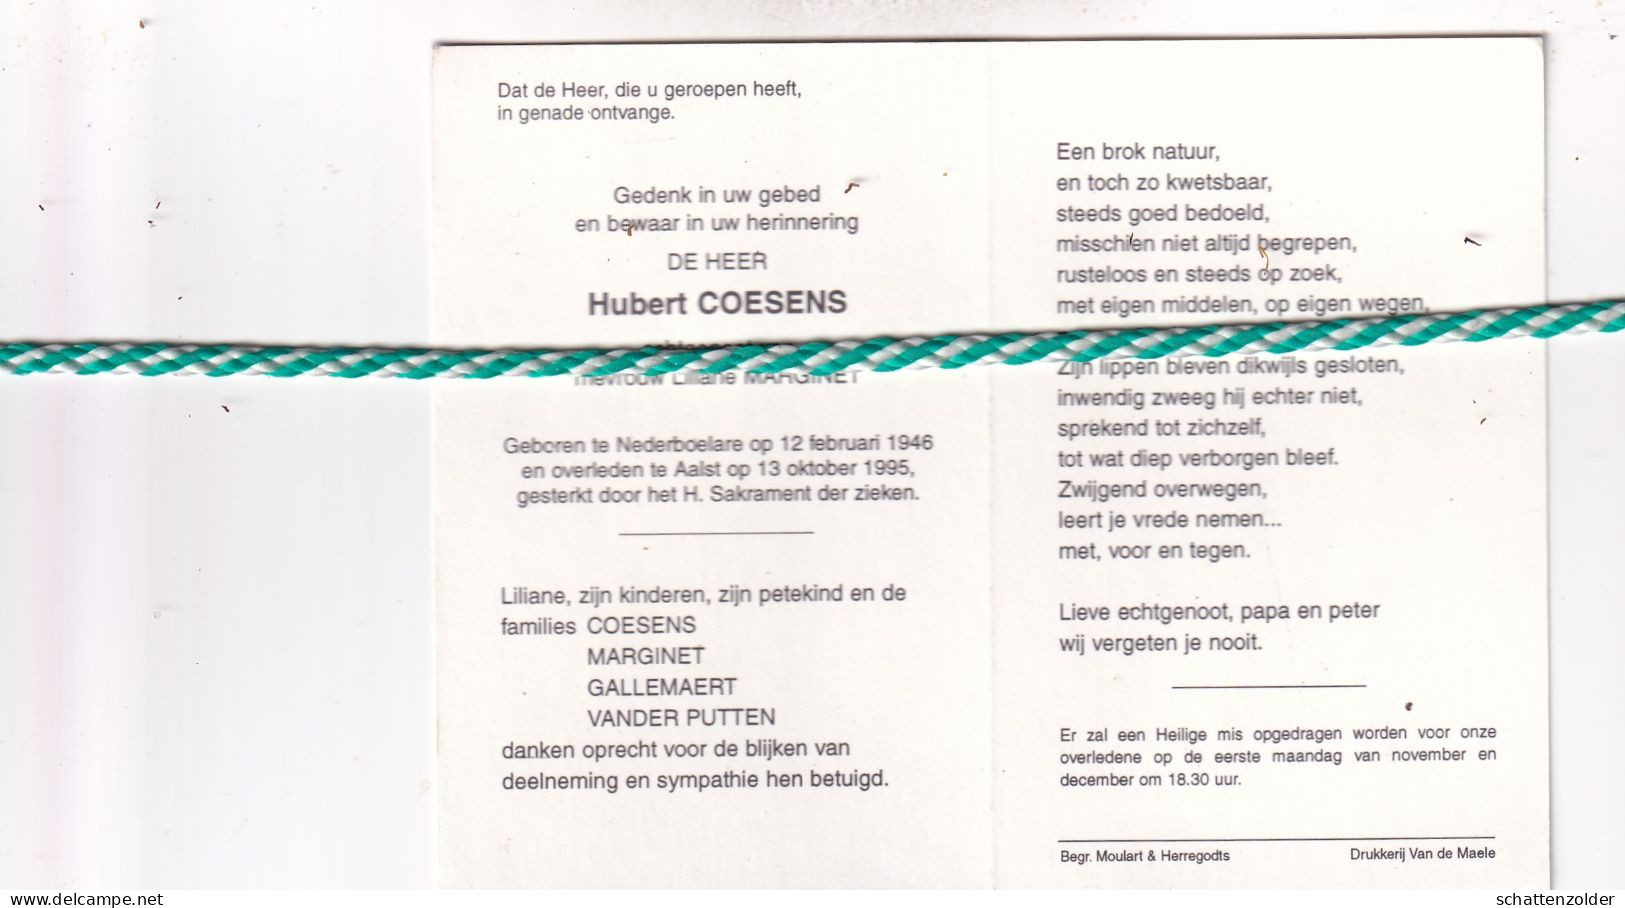 Hubert Coesens-Marginet, Nederboelare 1946, Aalst 1995. Foto - Todesanzeige